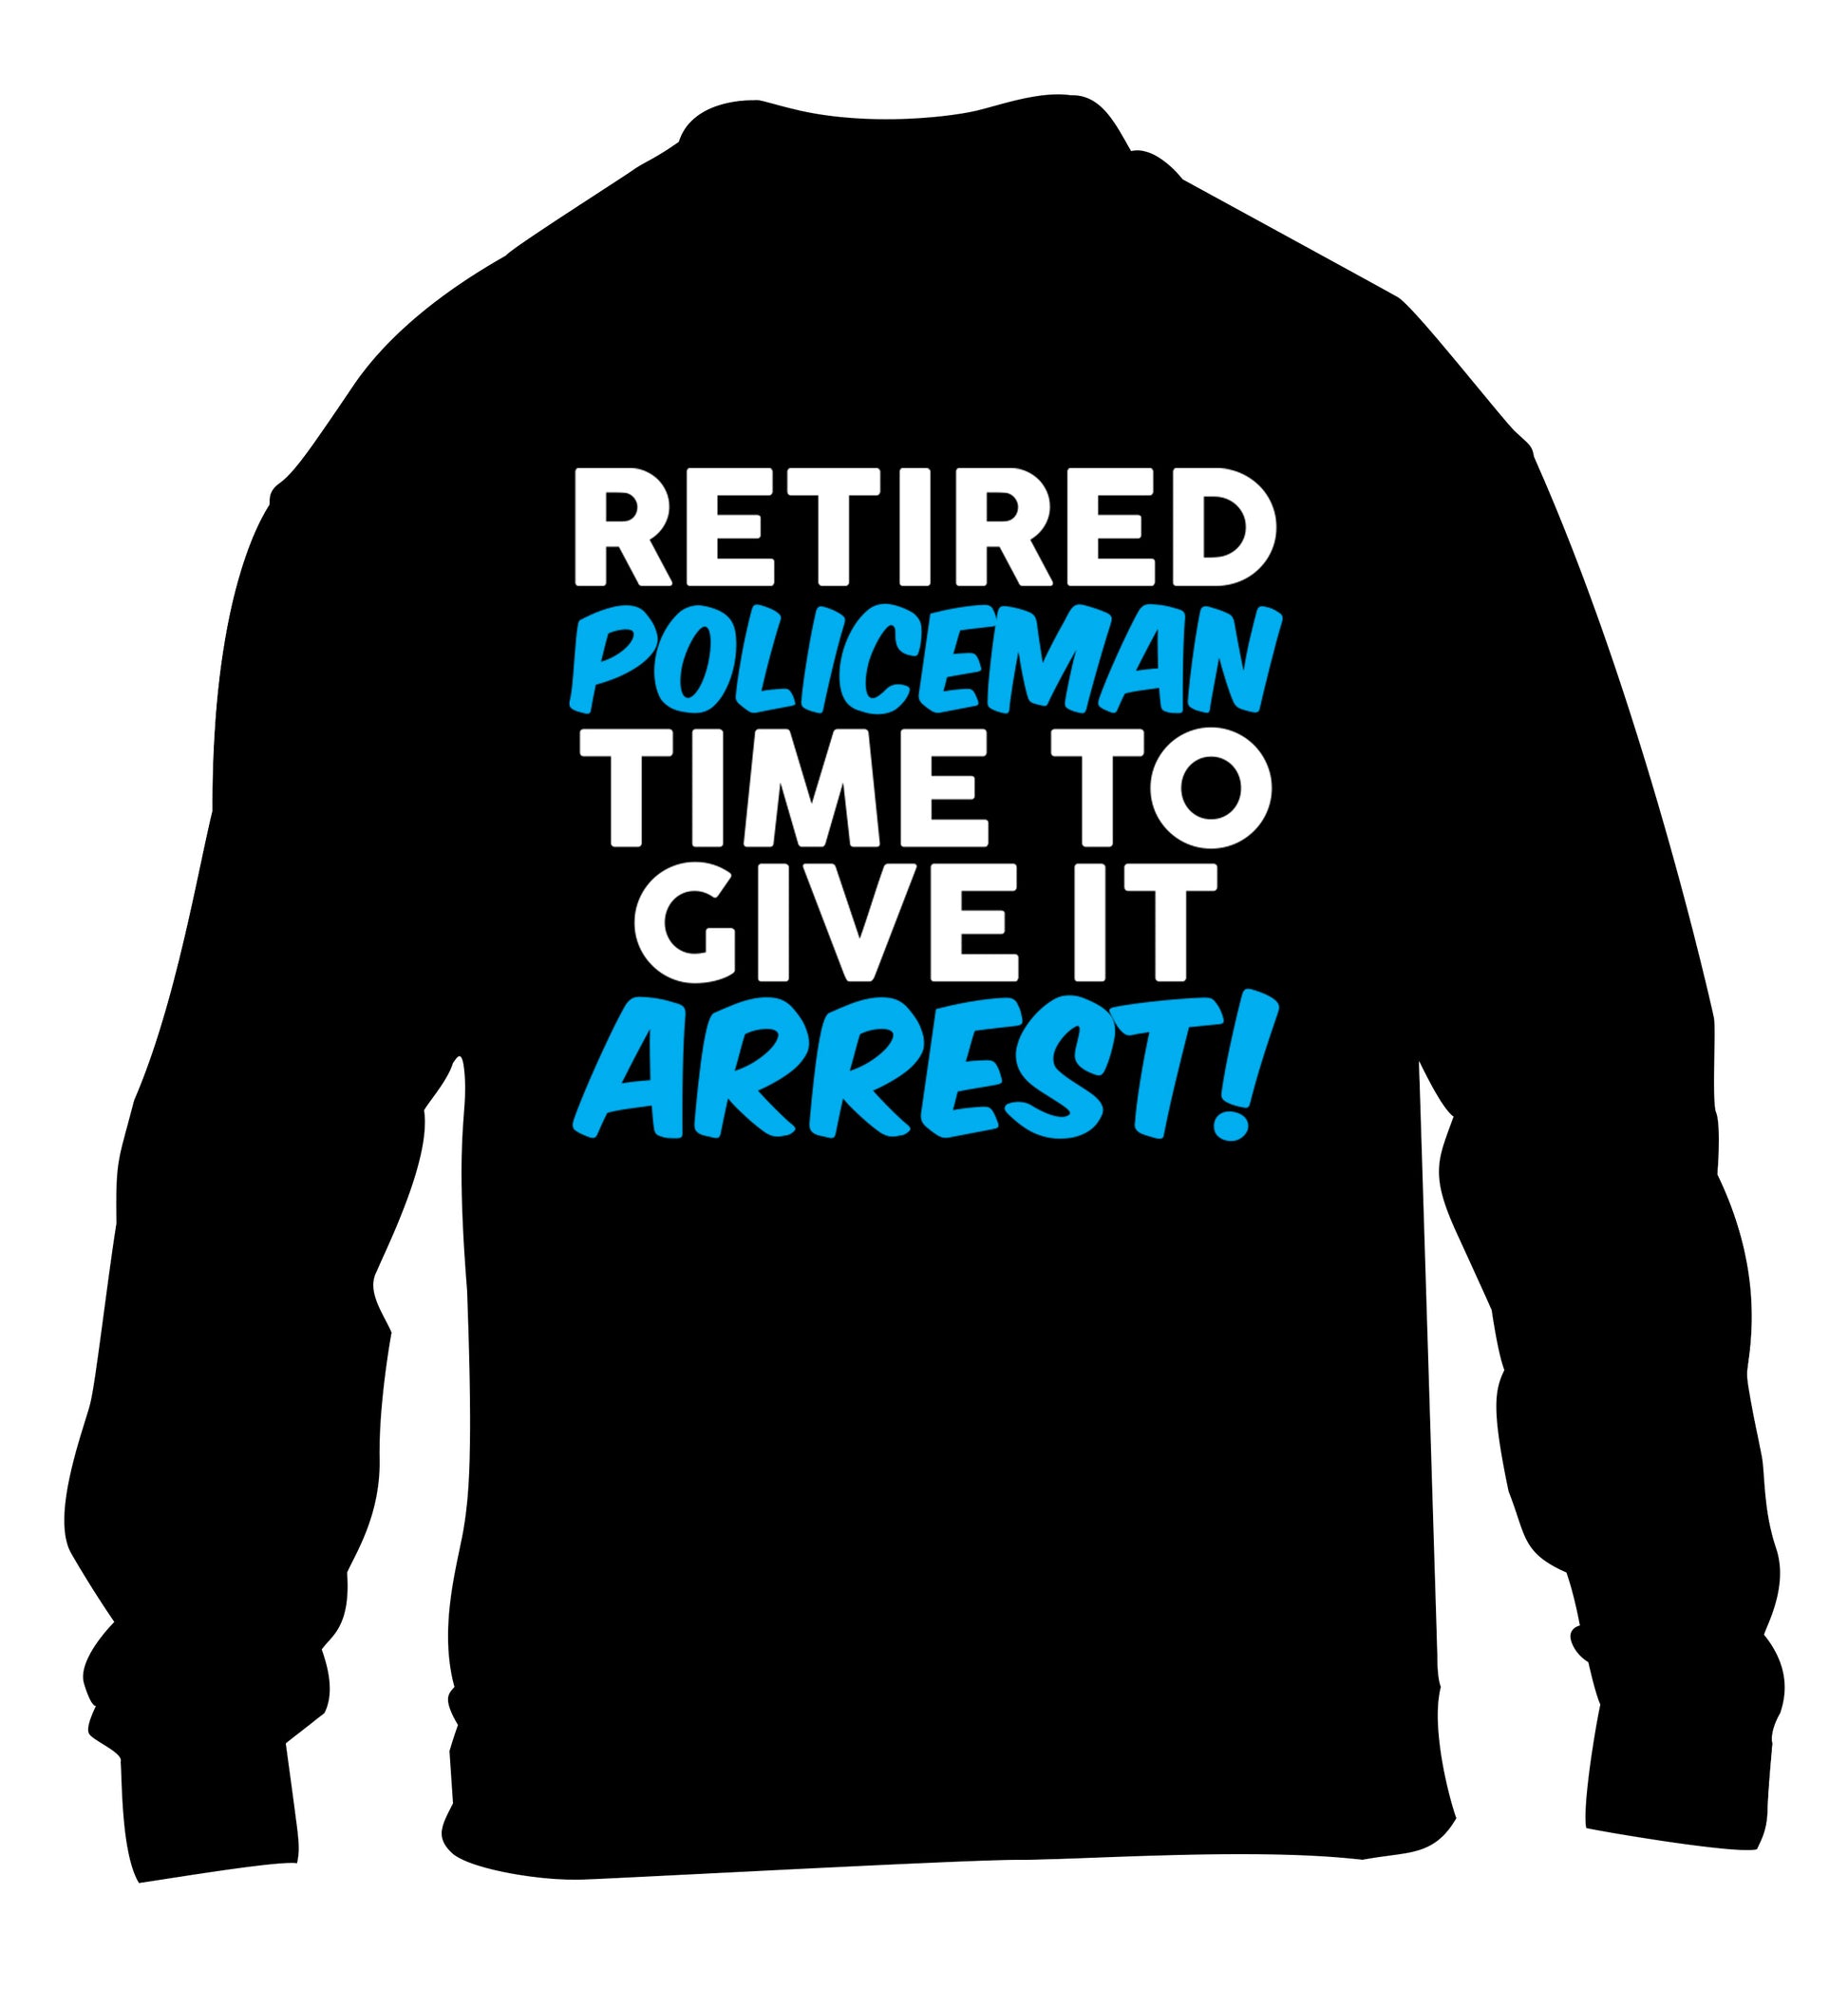 Retired policeman give it arresst! children's black sweater 12-13 Years